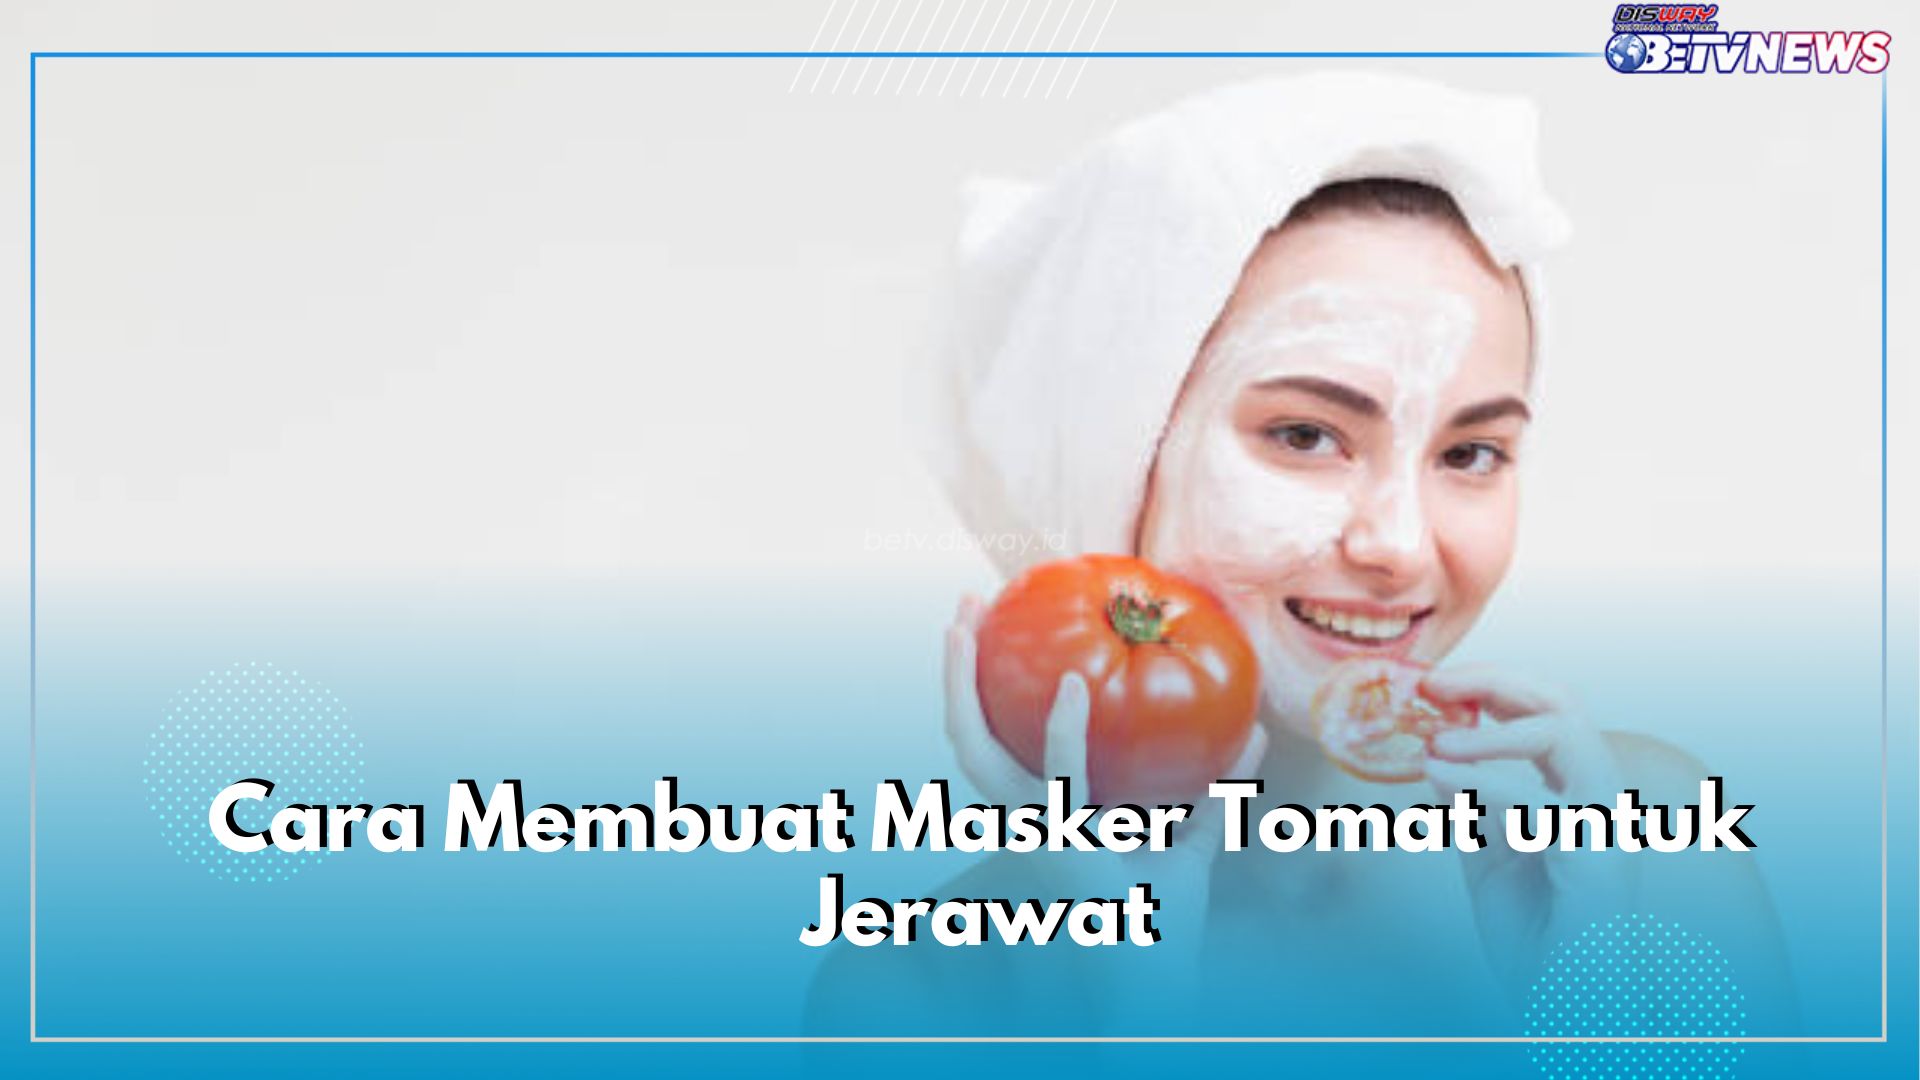 Cara Membuat Masker Tomat untuk Jerawat, Dijamin Aman Tanpa Bahan Campuran